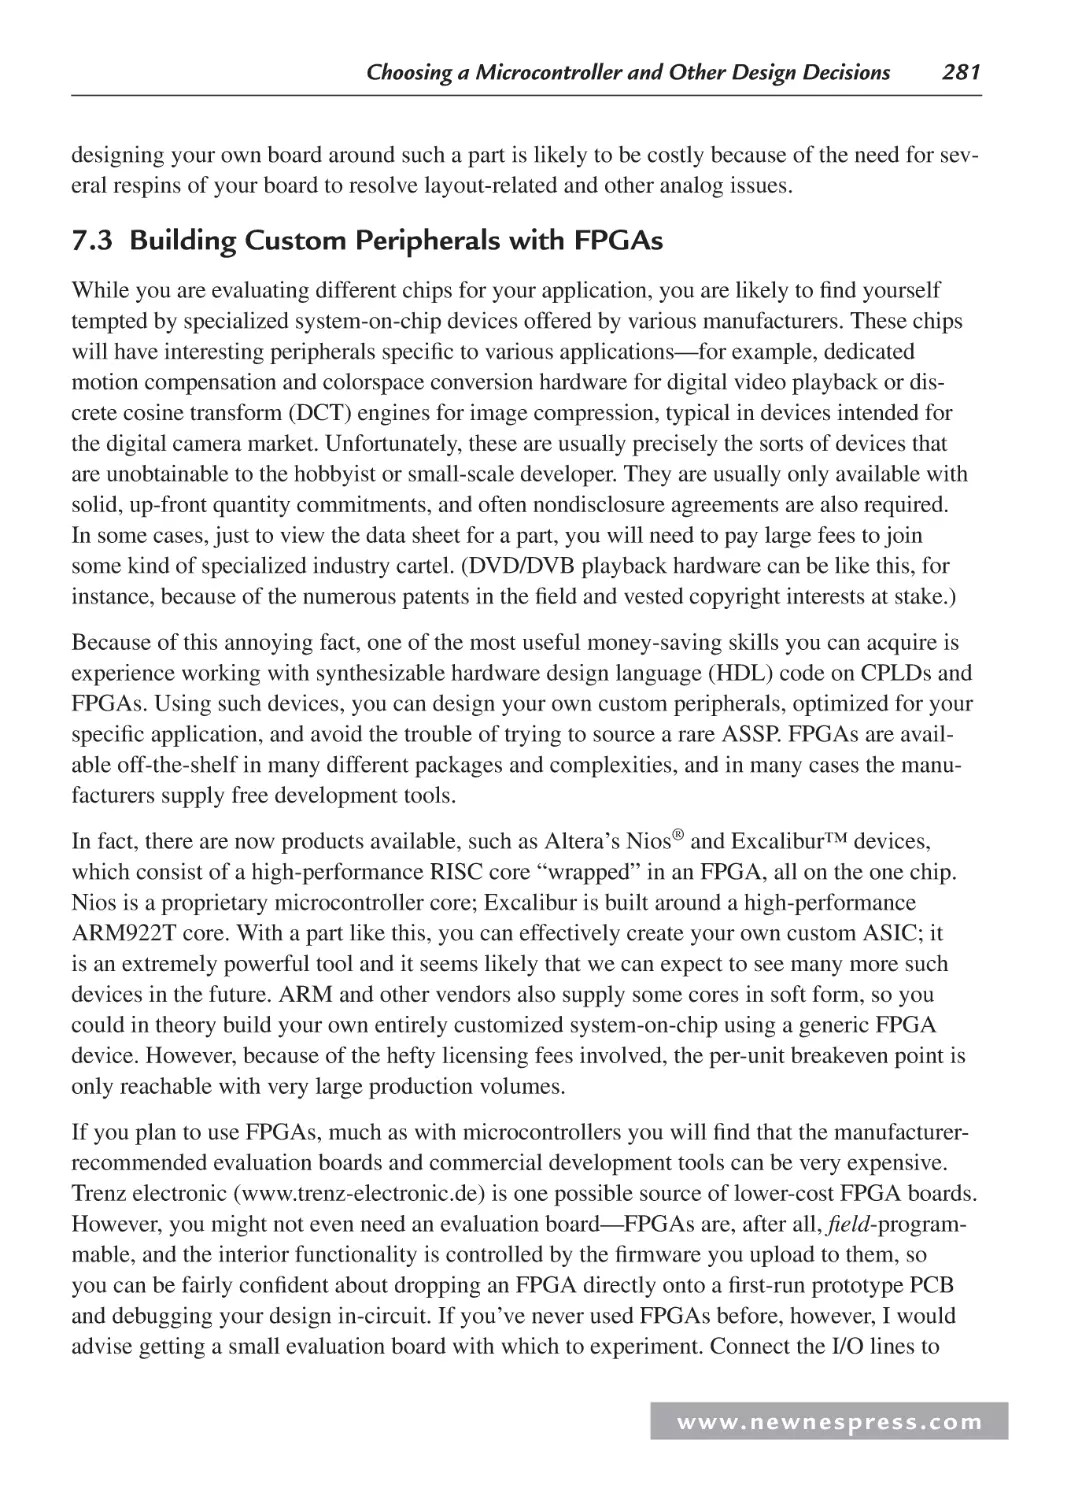 7.3 Building Custom Peripherals with FPGAs